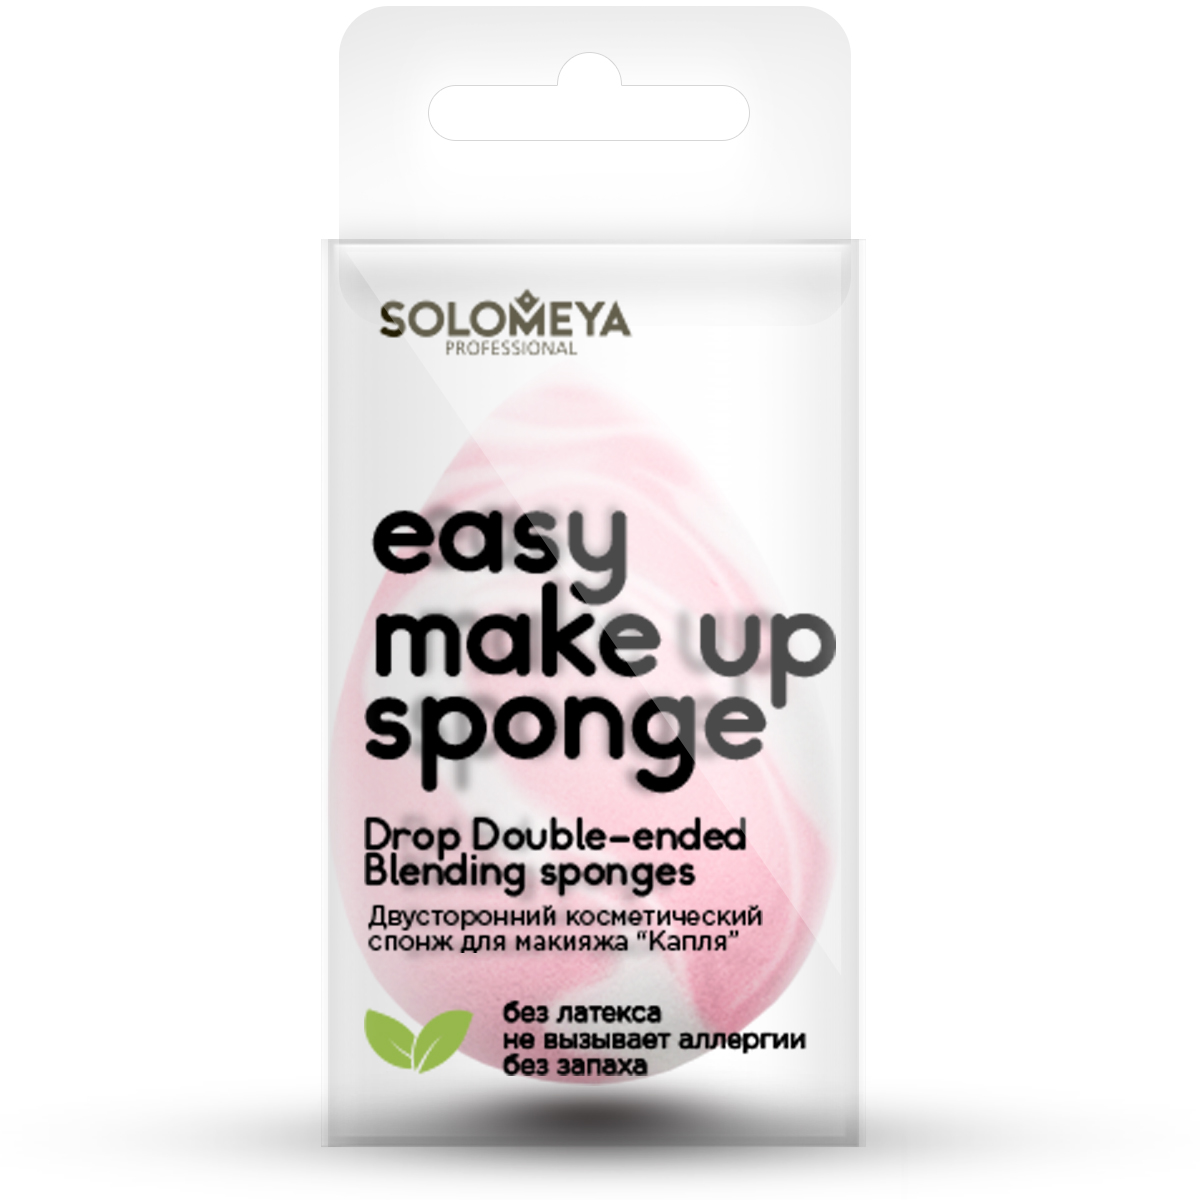 Solomeya Двусторонний косметический спонж для макияжа Drop Double-ended Blending Sponge, 17 г